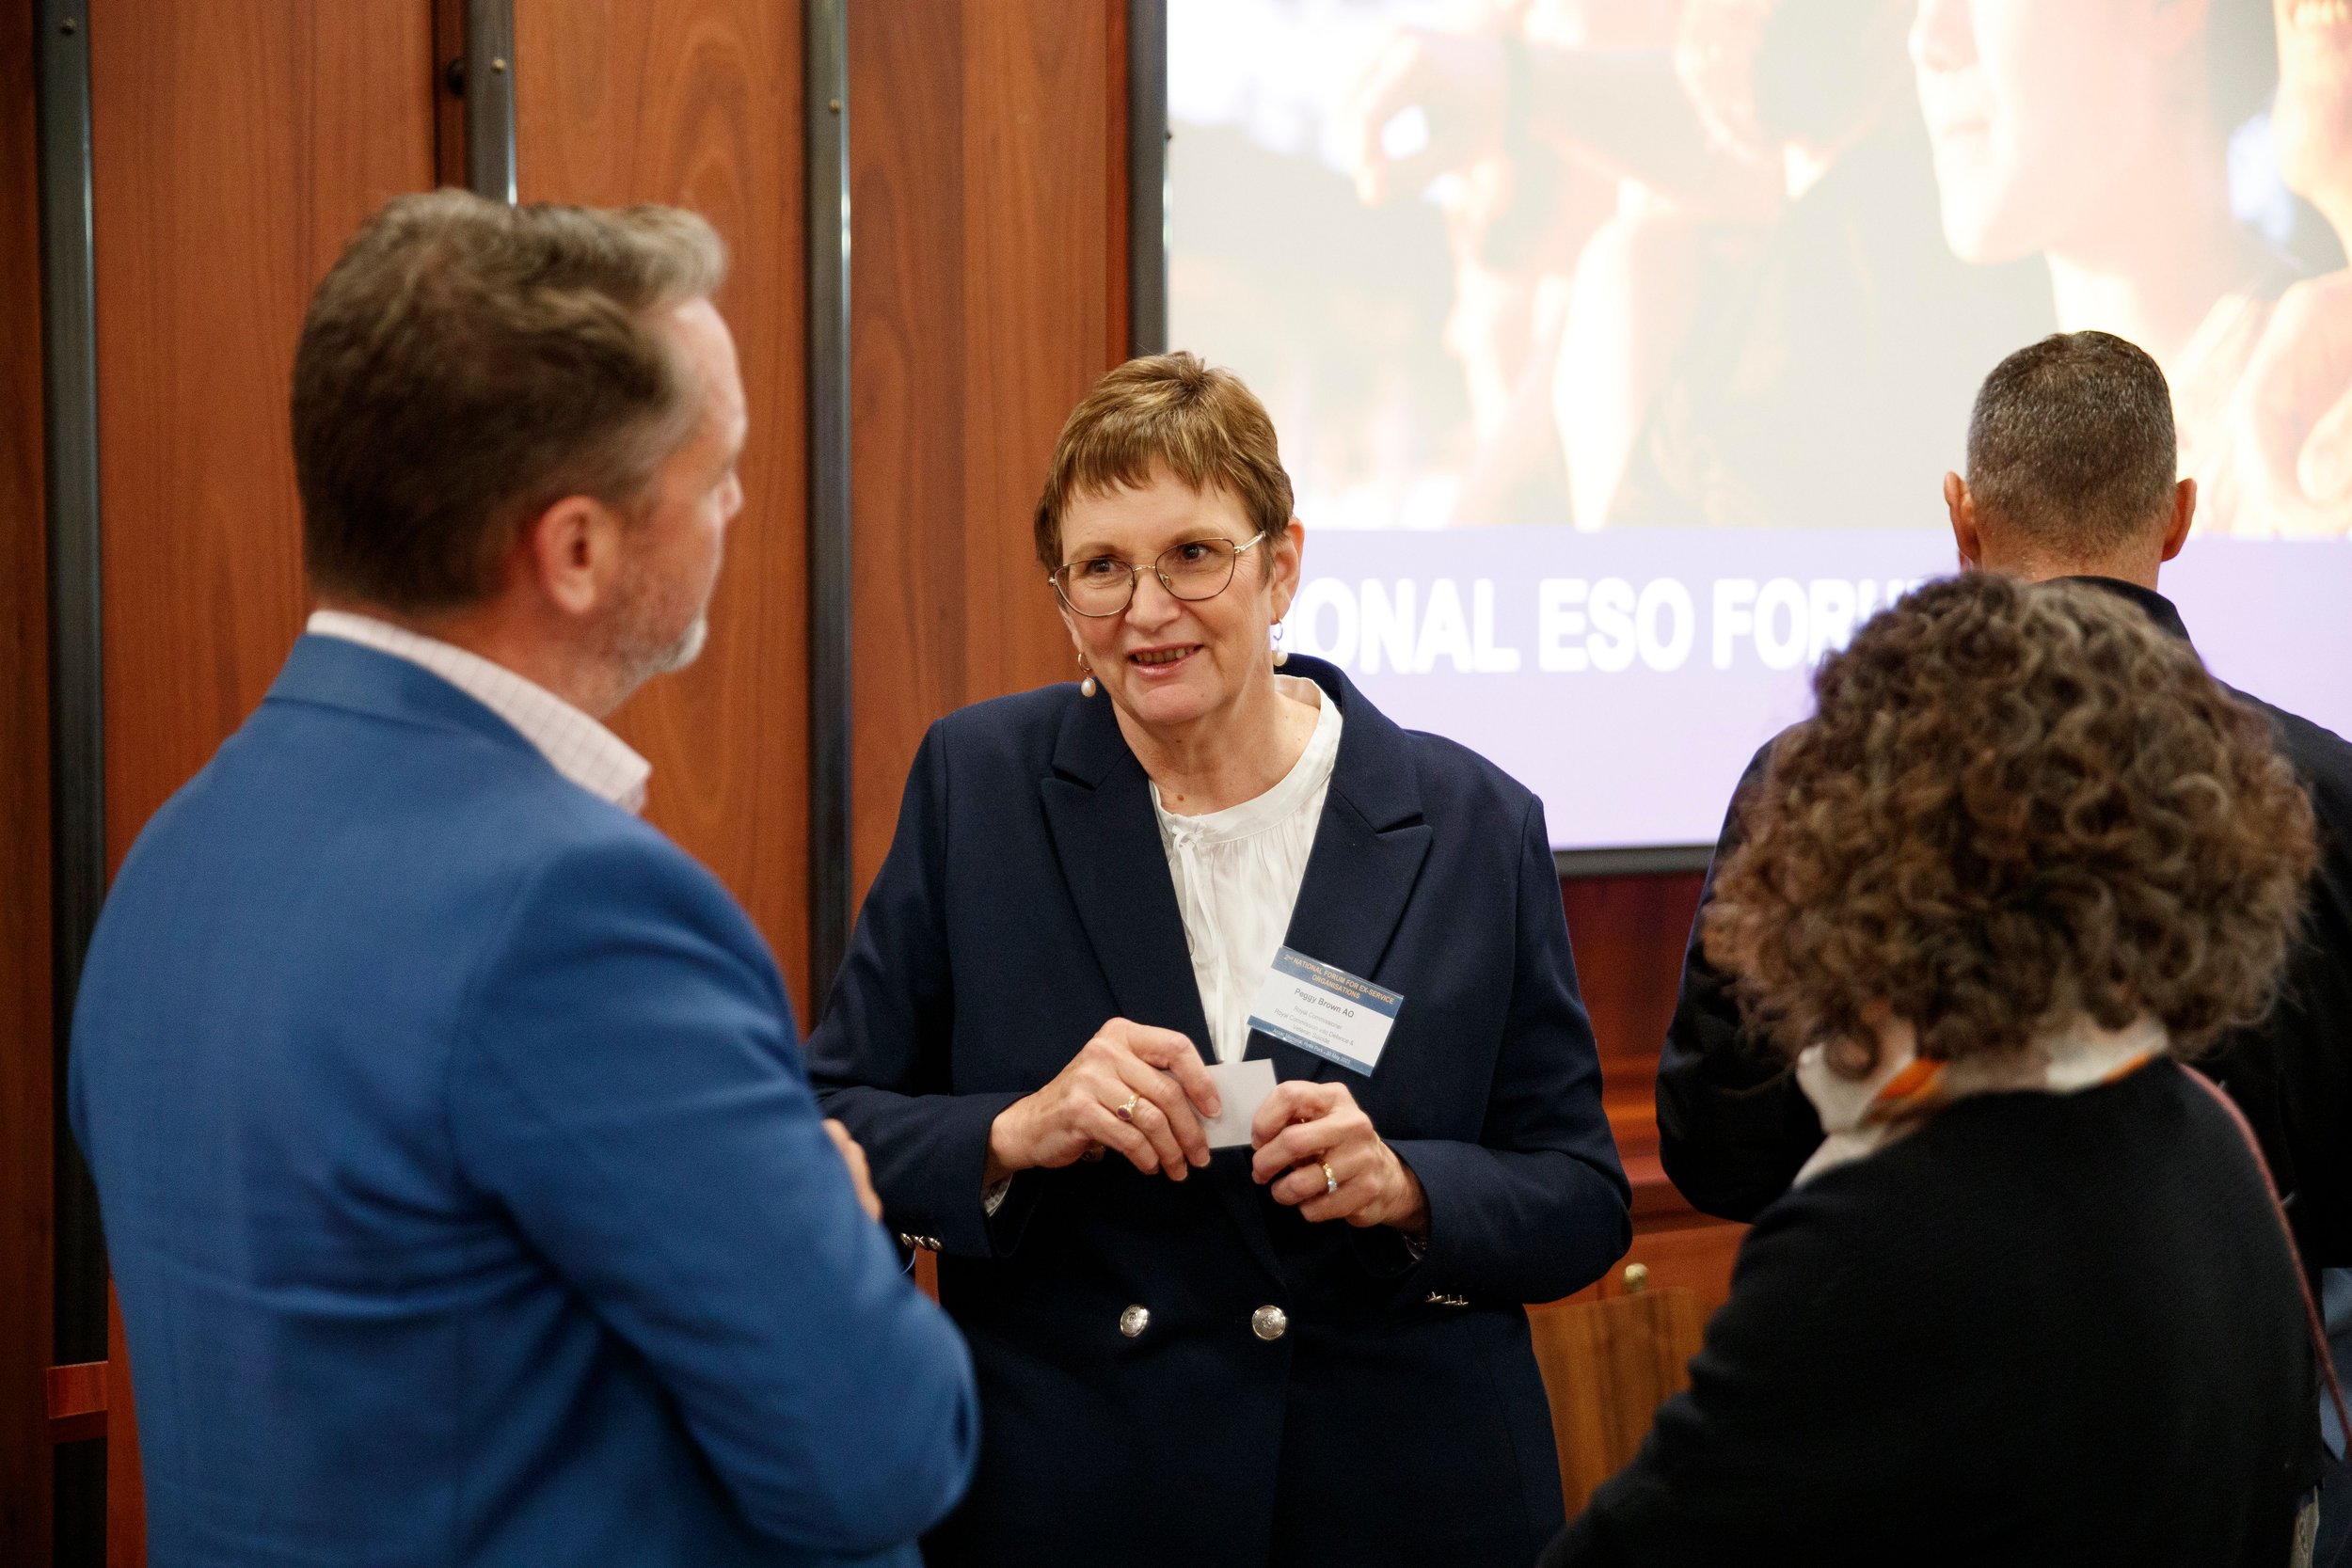 National Forum for ESOs — RSL Australia